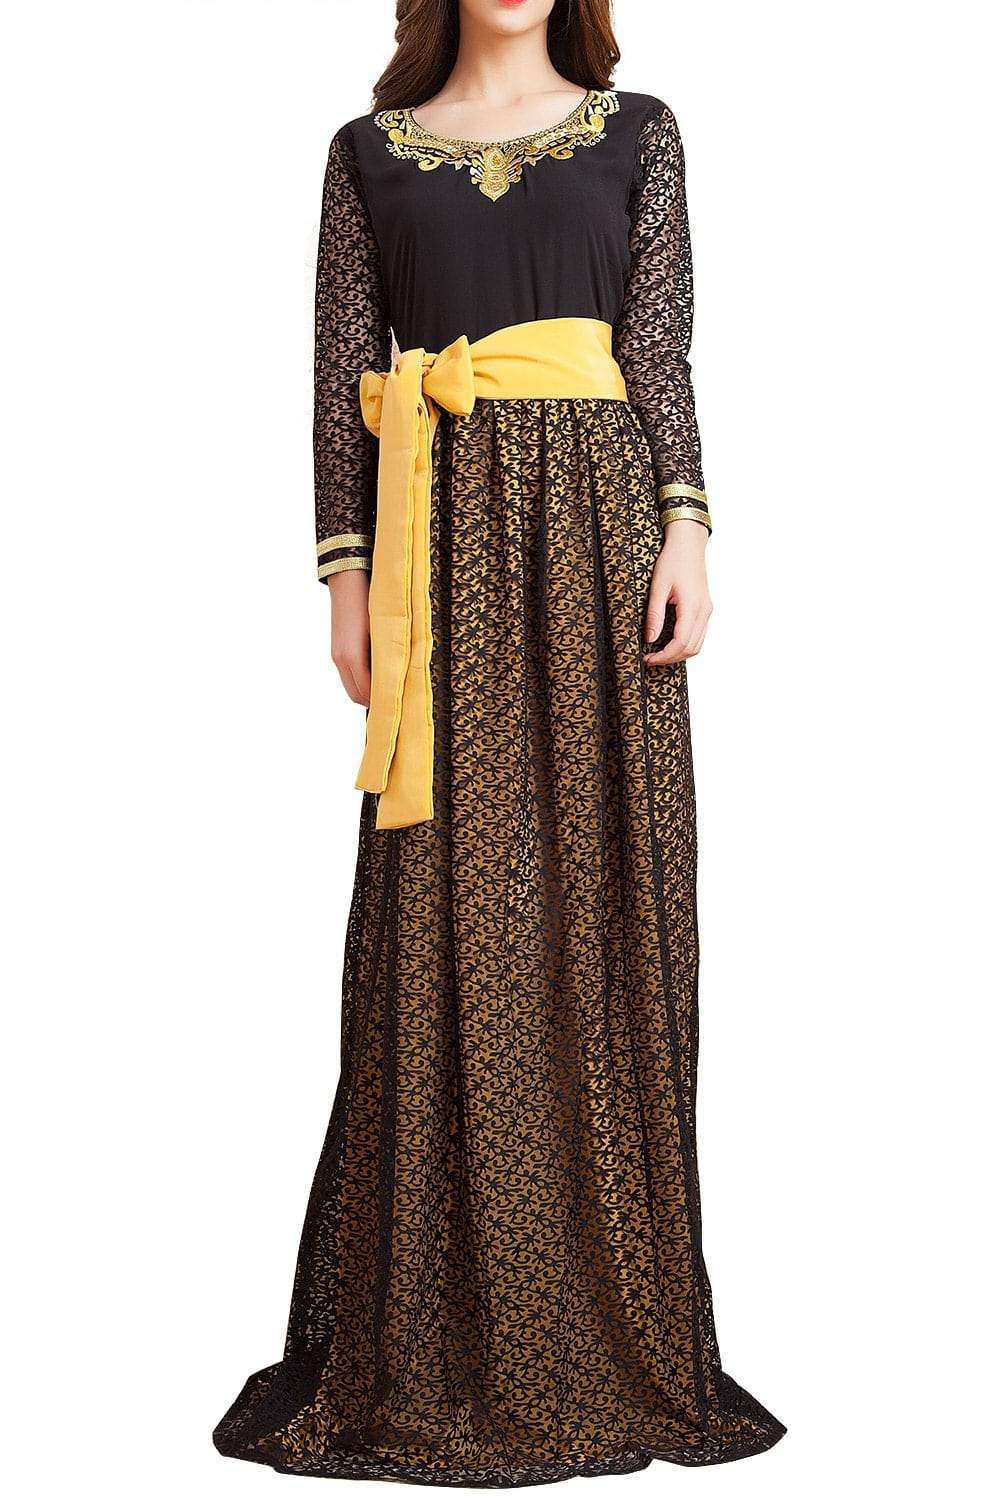 Yellow and Black Color Net Brasso Thread Work Arab Dubai Style Islamic Dress